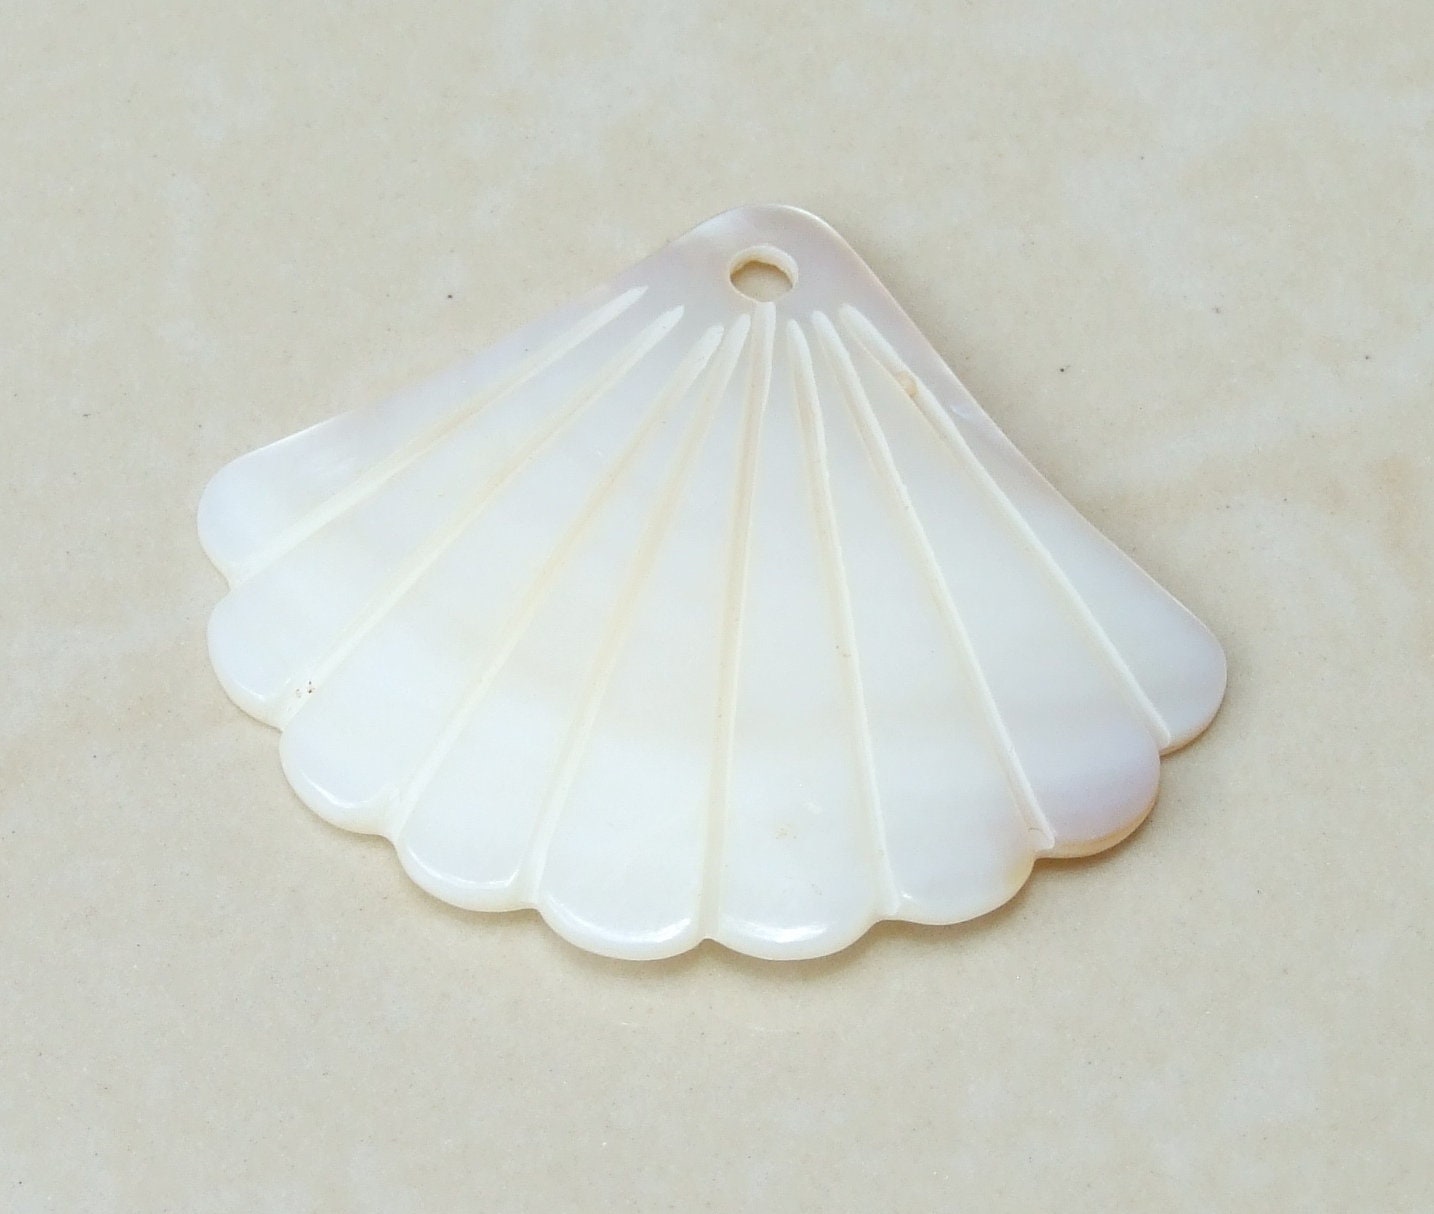 5pcs Freshwater Shell Fan Pendant, Natural Shell - Gemstone Pendant - Carved - Wheat Color Matrix - Beach - Ocean - BOHO - 45mm x 50mm